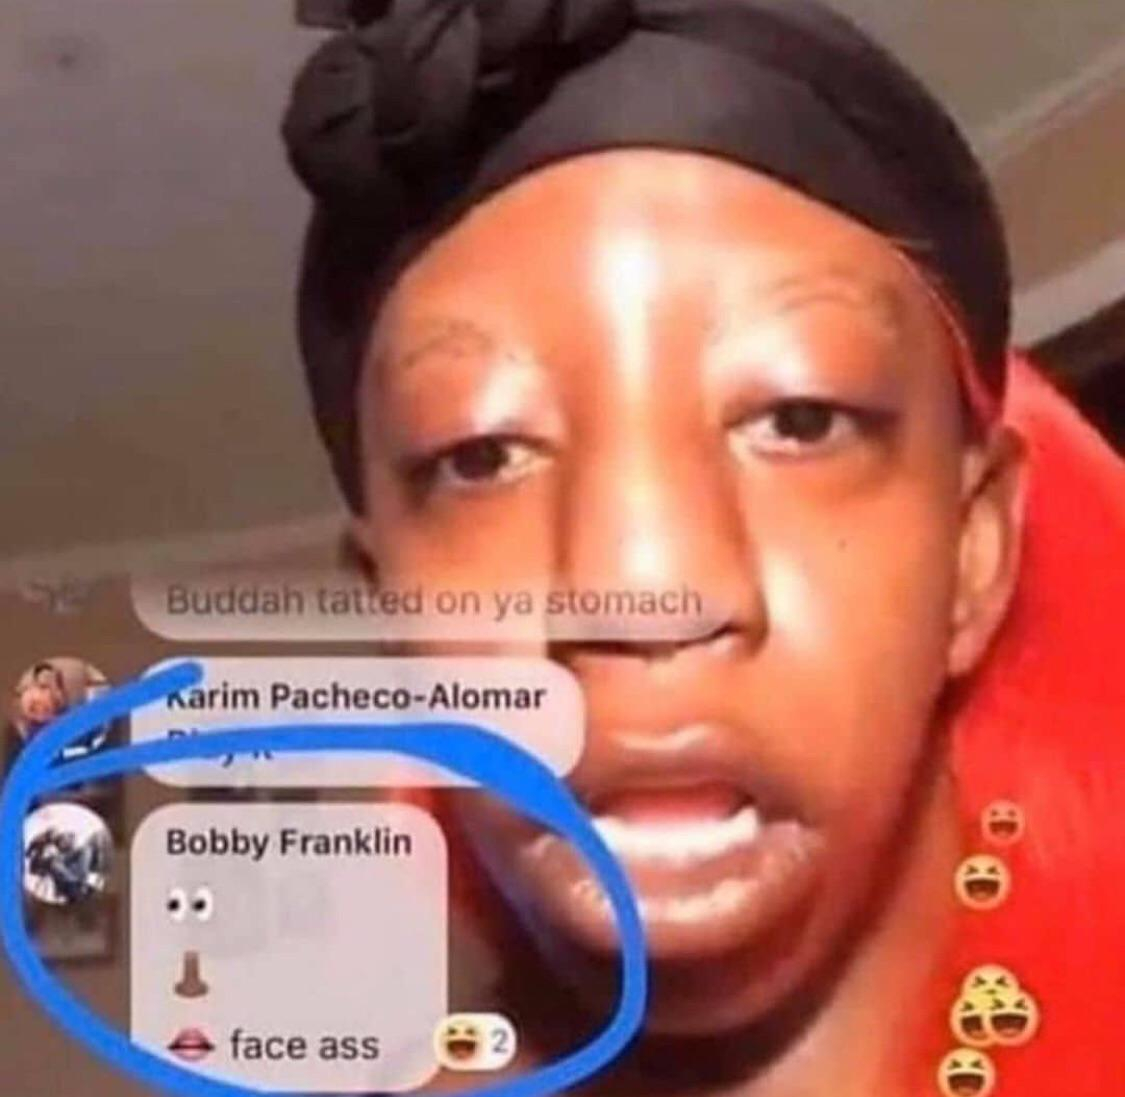 Meme - Buddah tatted on ya stomach Karim PachecoAlomar Bobby Franklin face ass